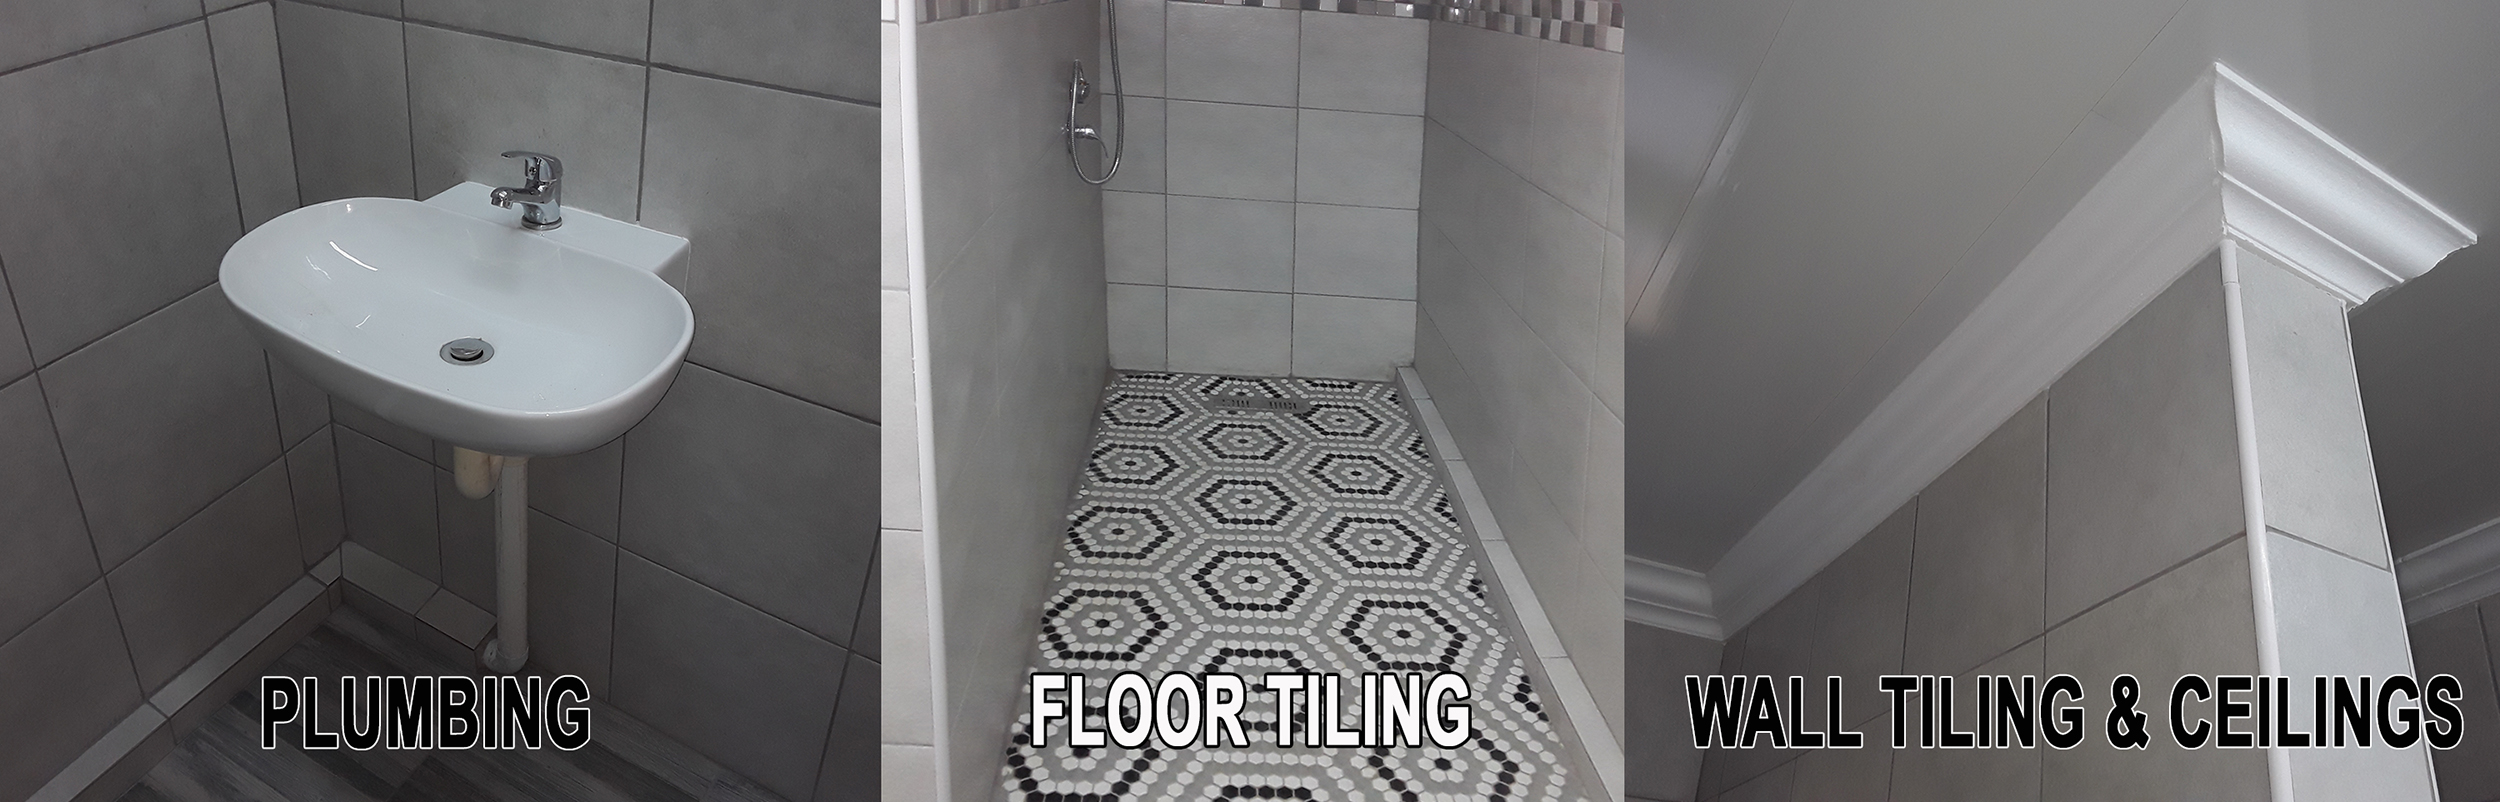 Plumbing & Tiling (Wall & Floor)